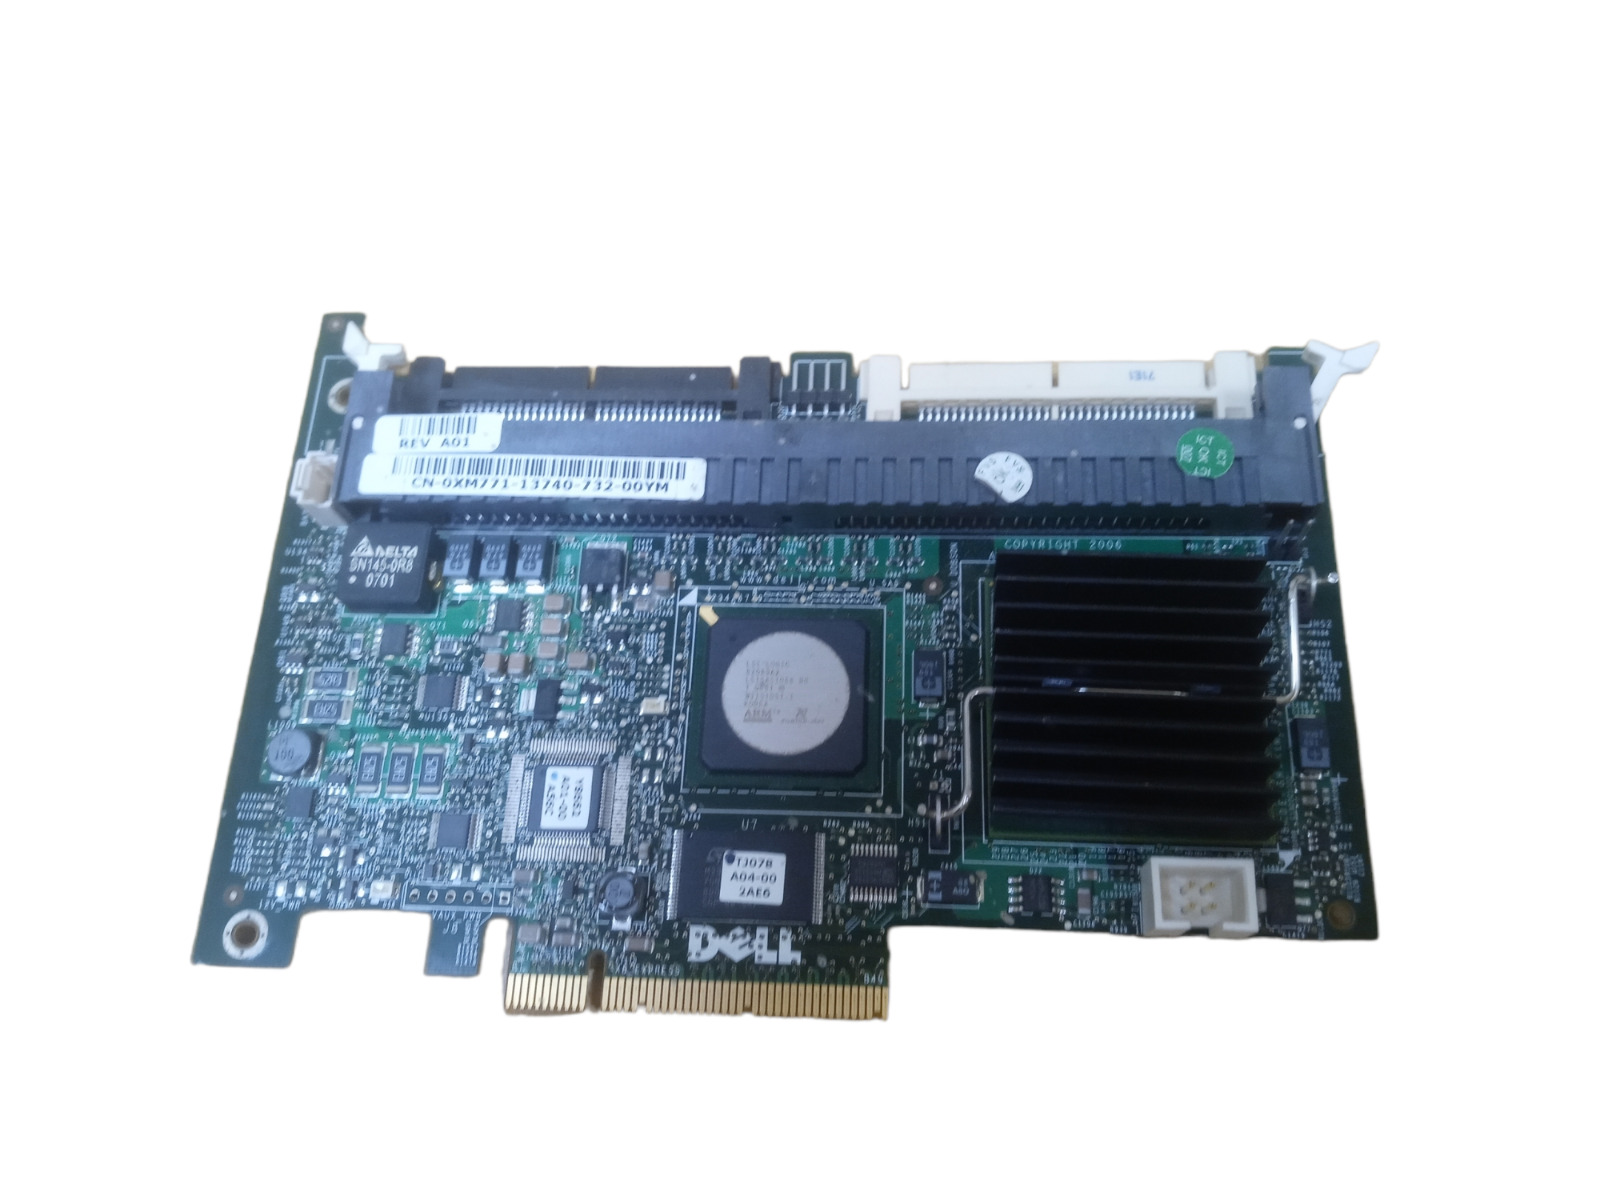 Dell PERC 5/i 256MB PCI-E x8 SAS 0XM771 RAID Controller Card Tested Working